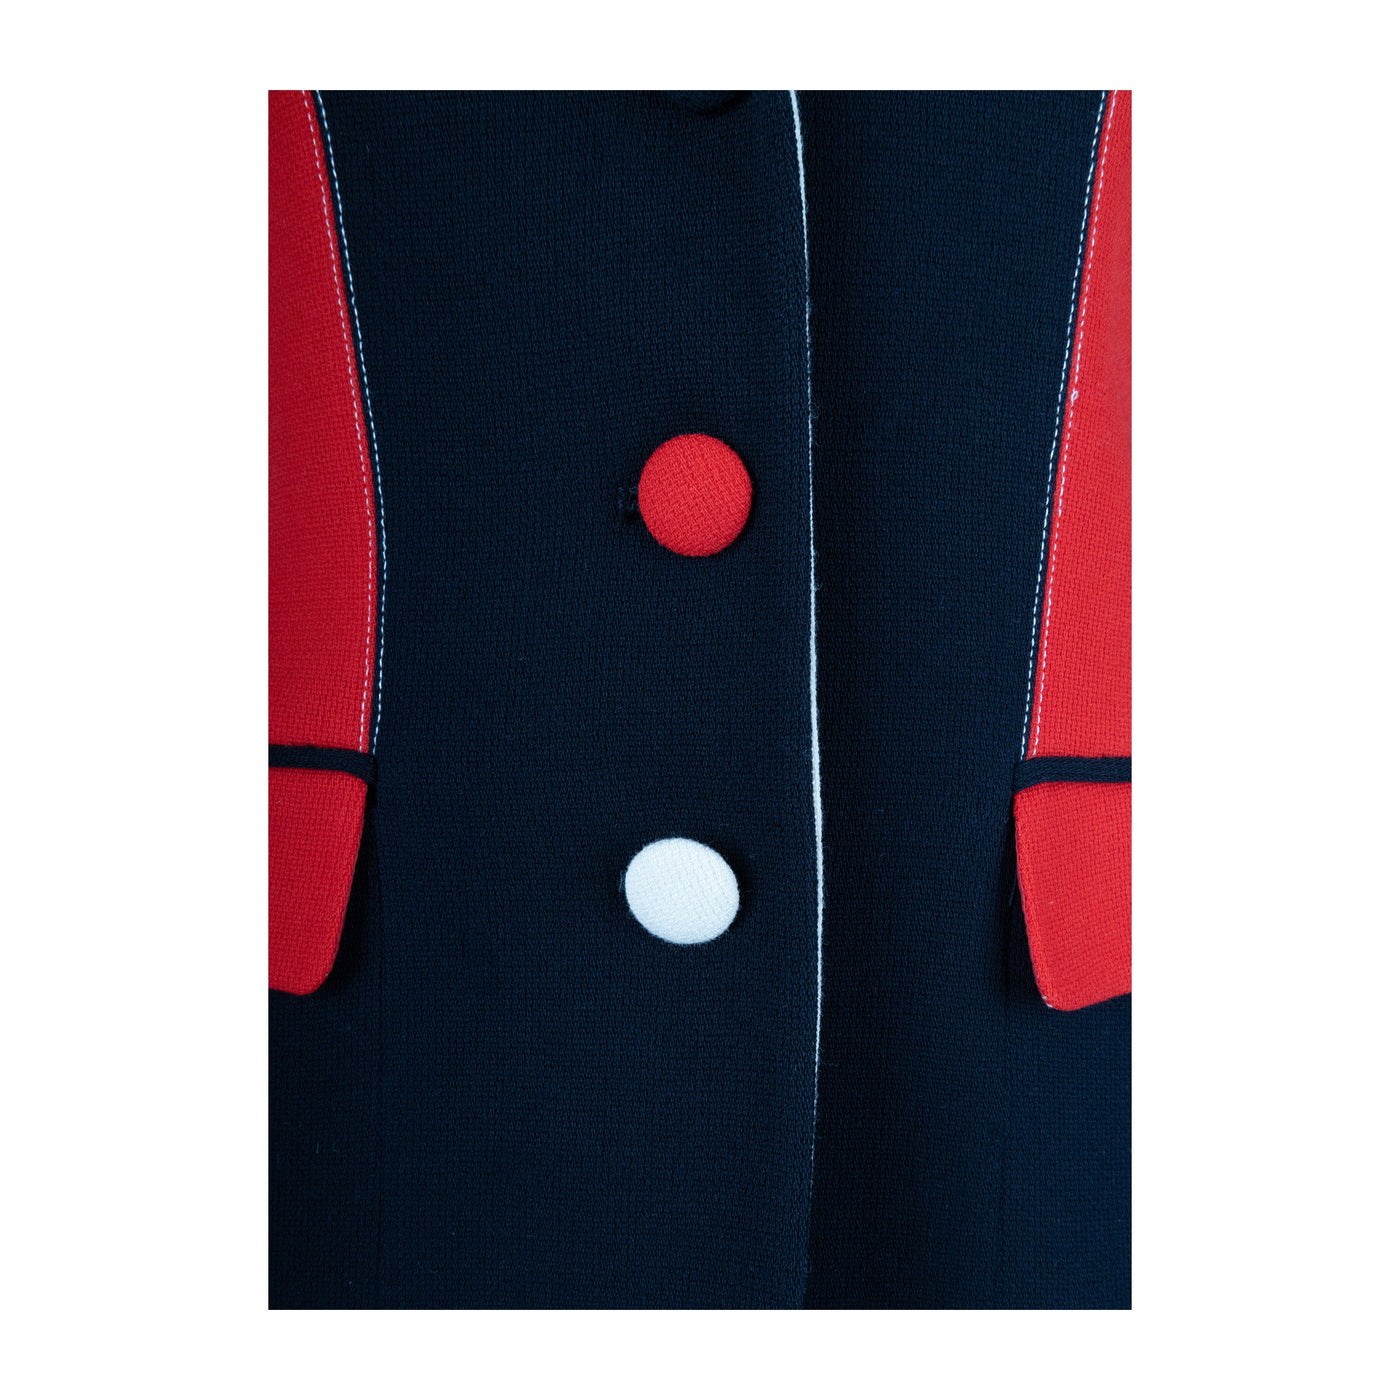 Secondhand Collection Privée Colorblock Jacket